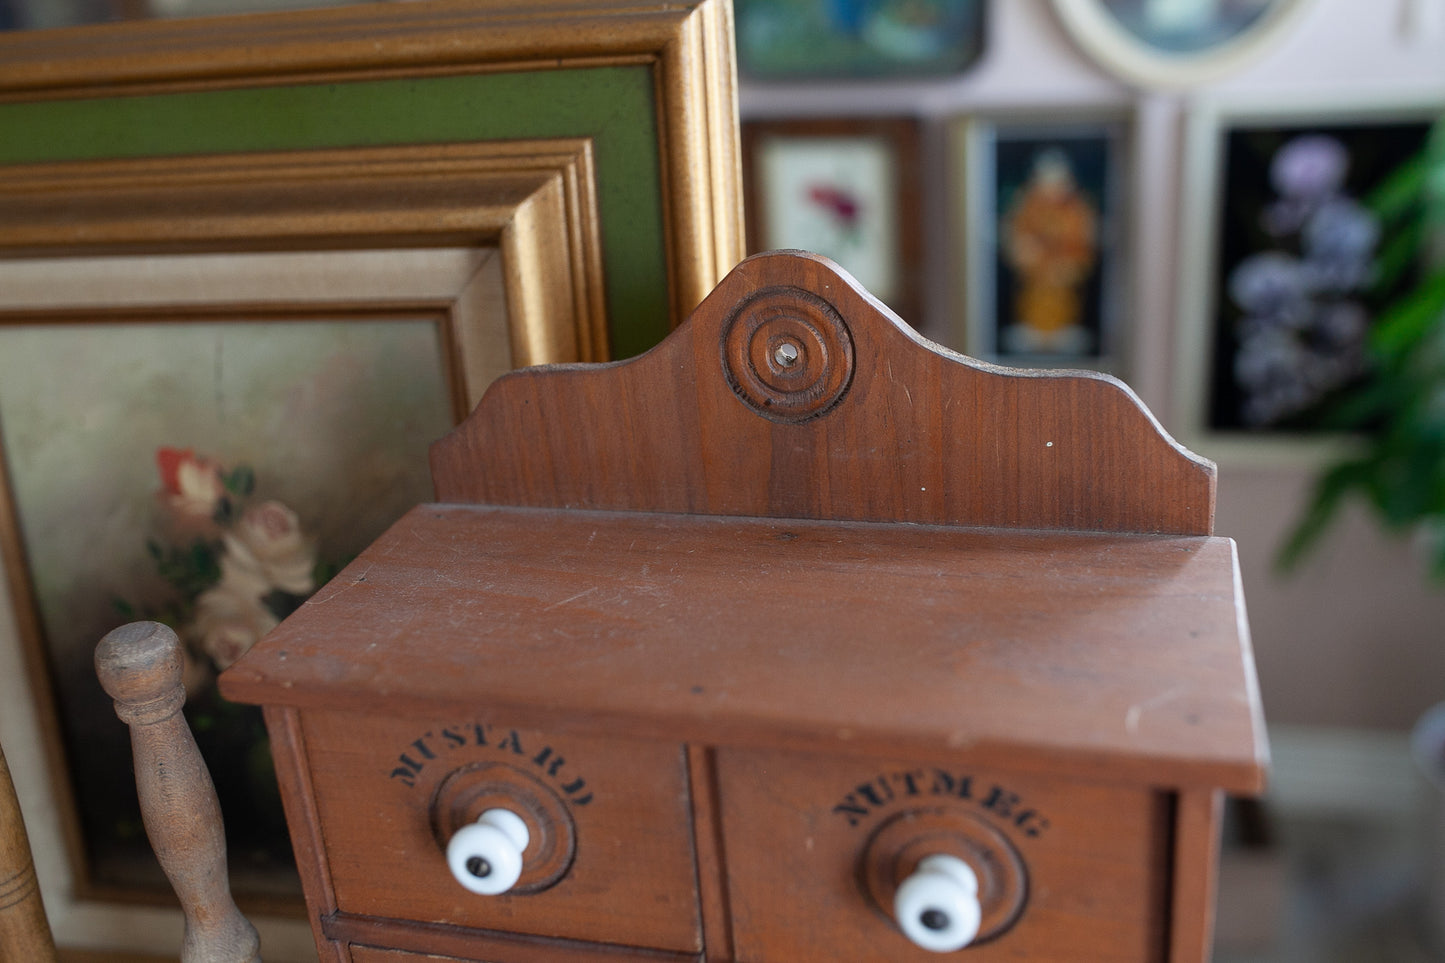 Vintage Spice Drawers - Eight Drawer Wood Spice Cabinet/Porcelain Knobs/Farmhouse/Primitive